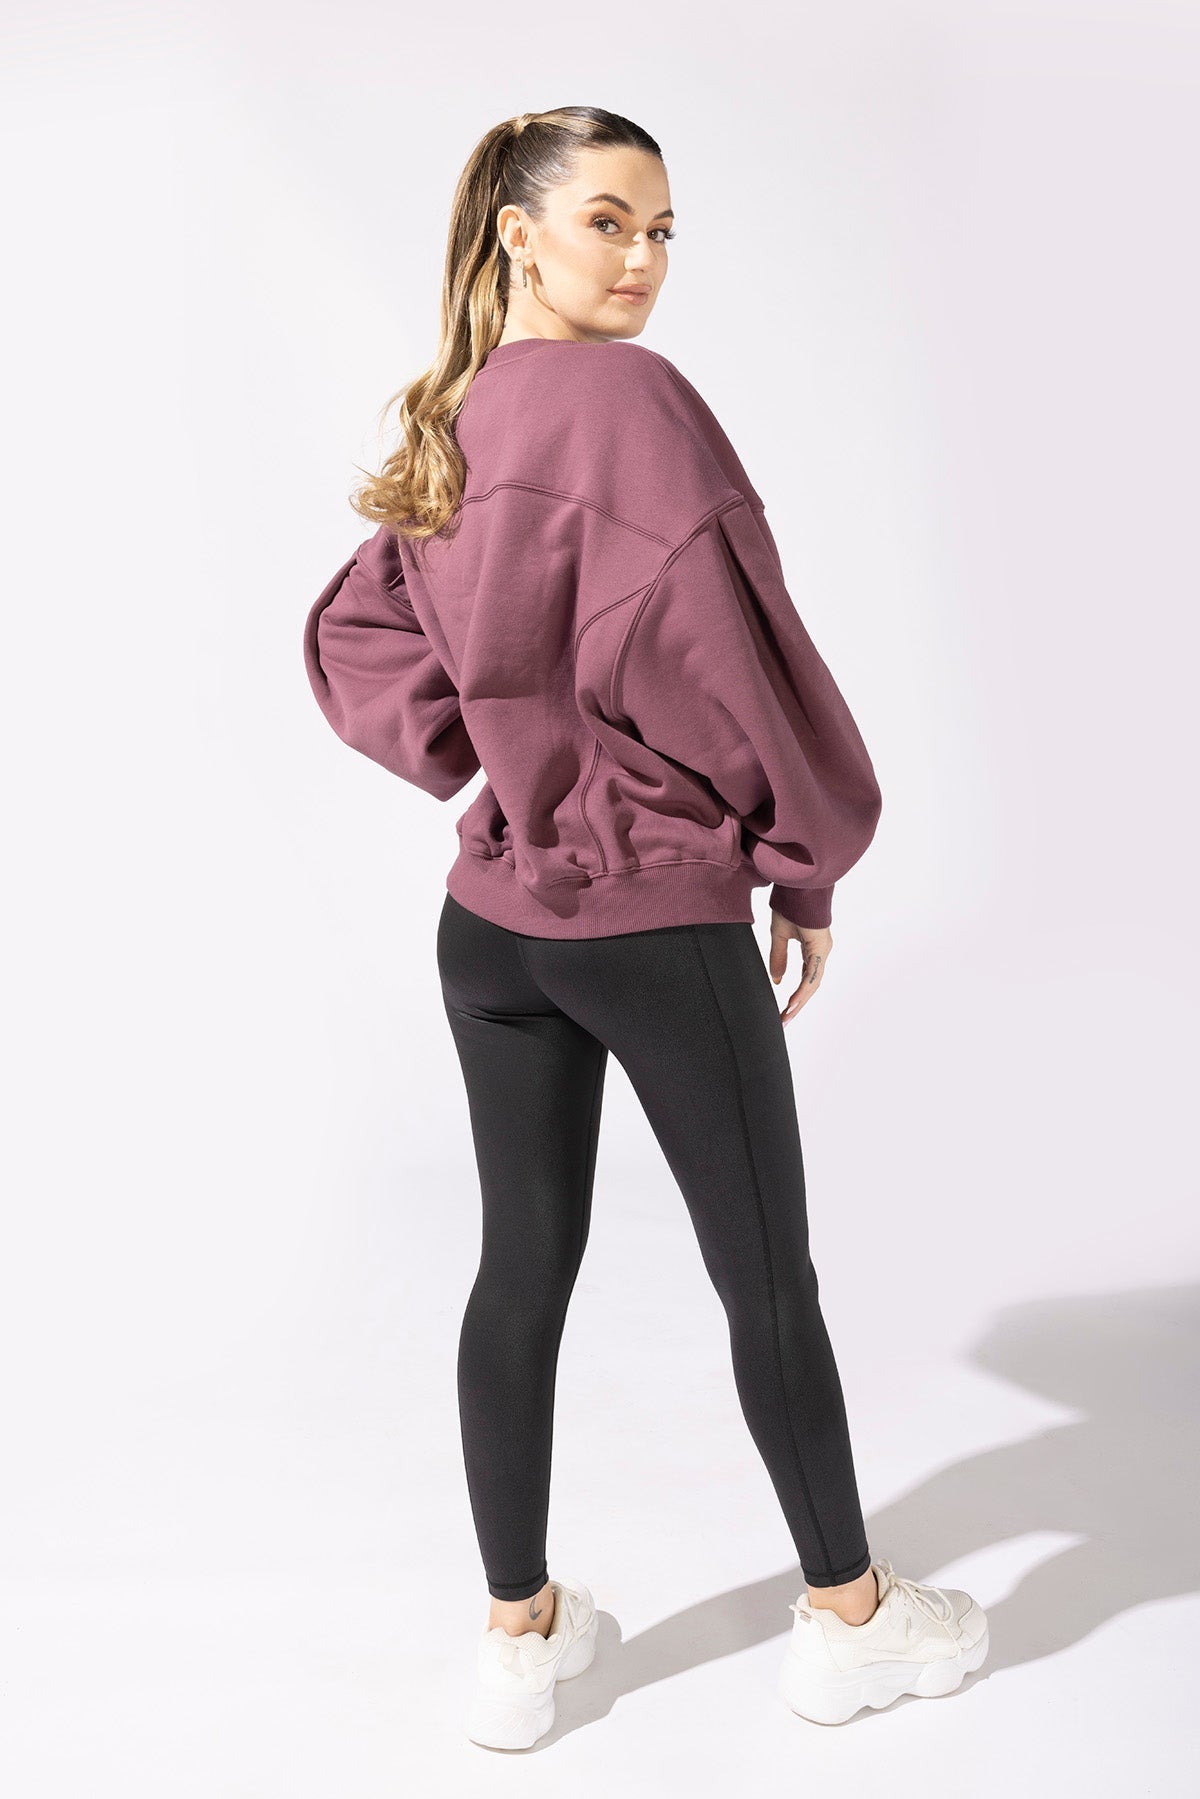 Hoodies & Outerwear – POPFLEX®  Super cropped sweater, Unique